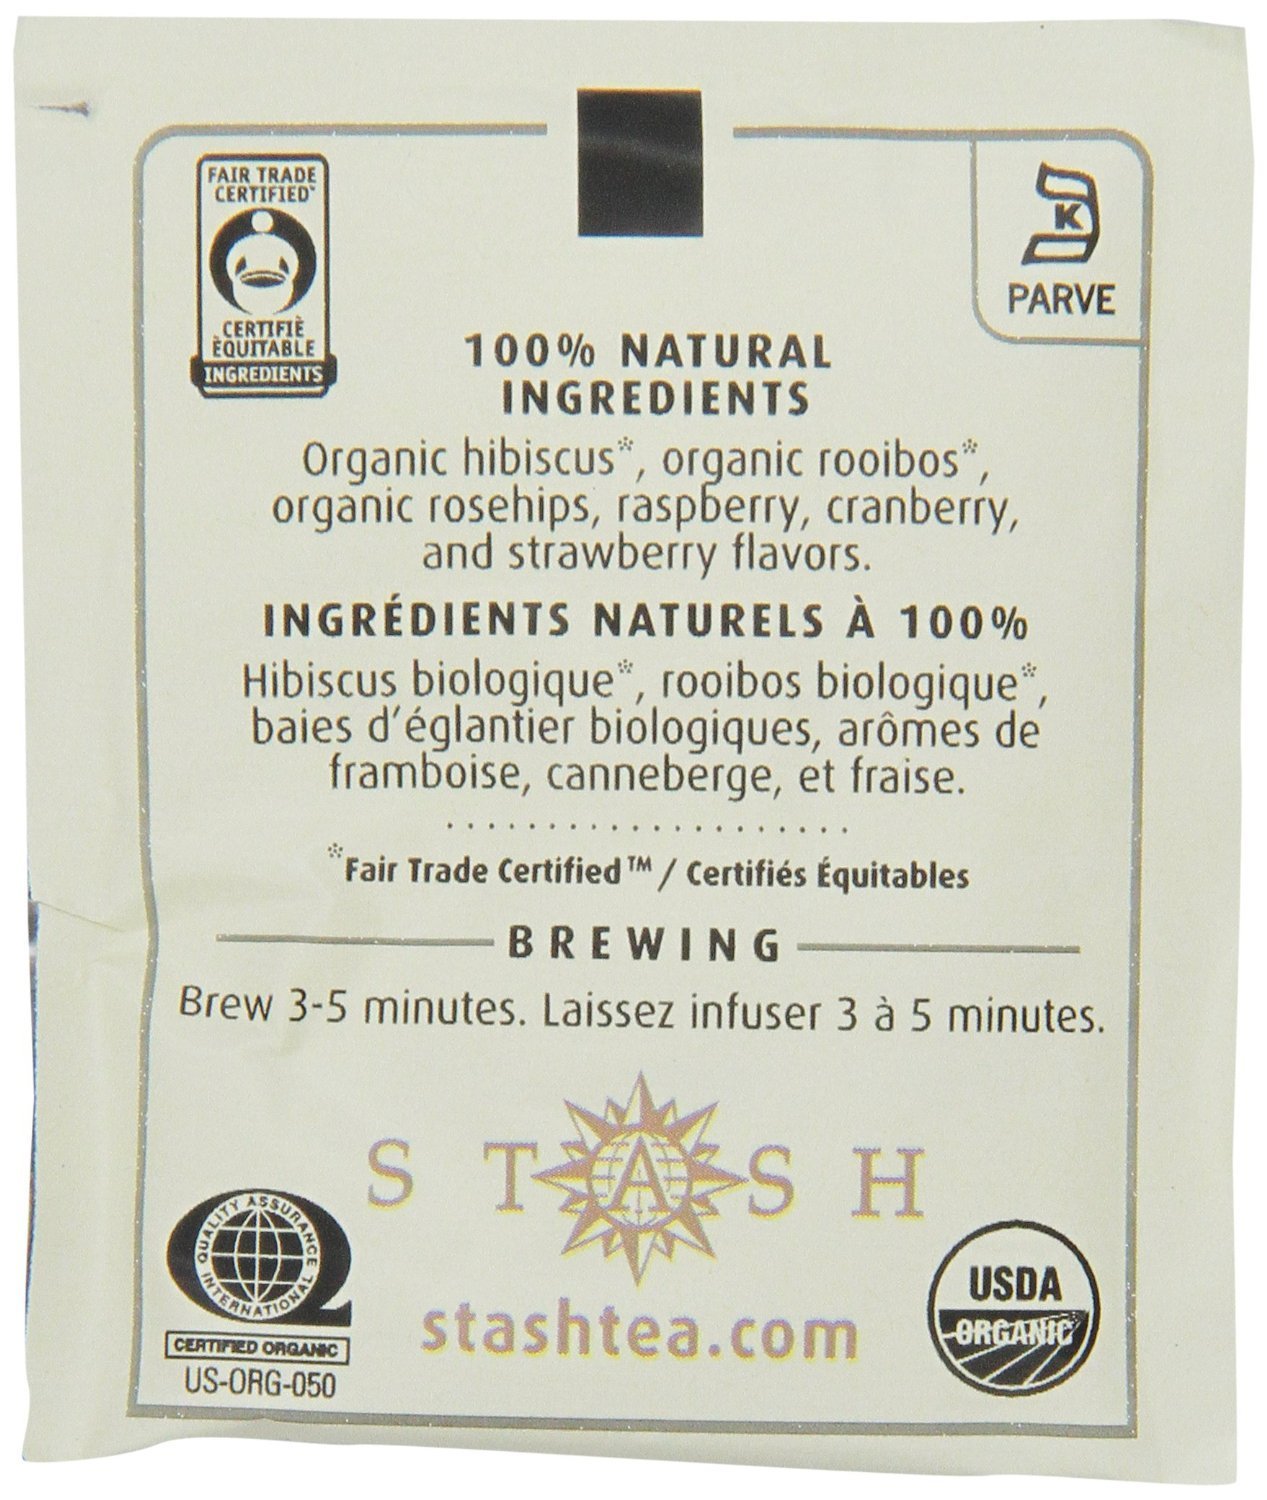 Stash Tea Organic Herbal Tea Bags in Foil, Very Berry, 100 Count free ...